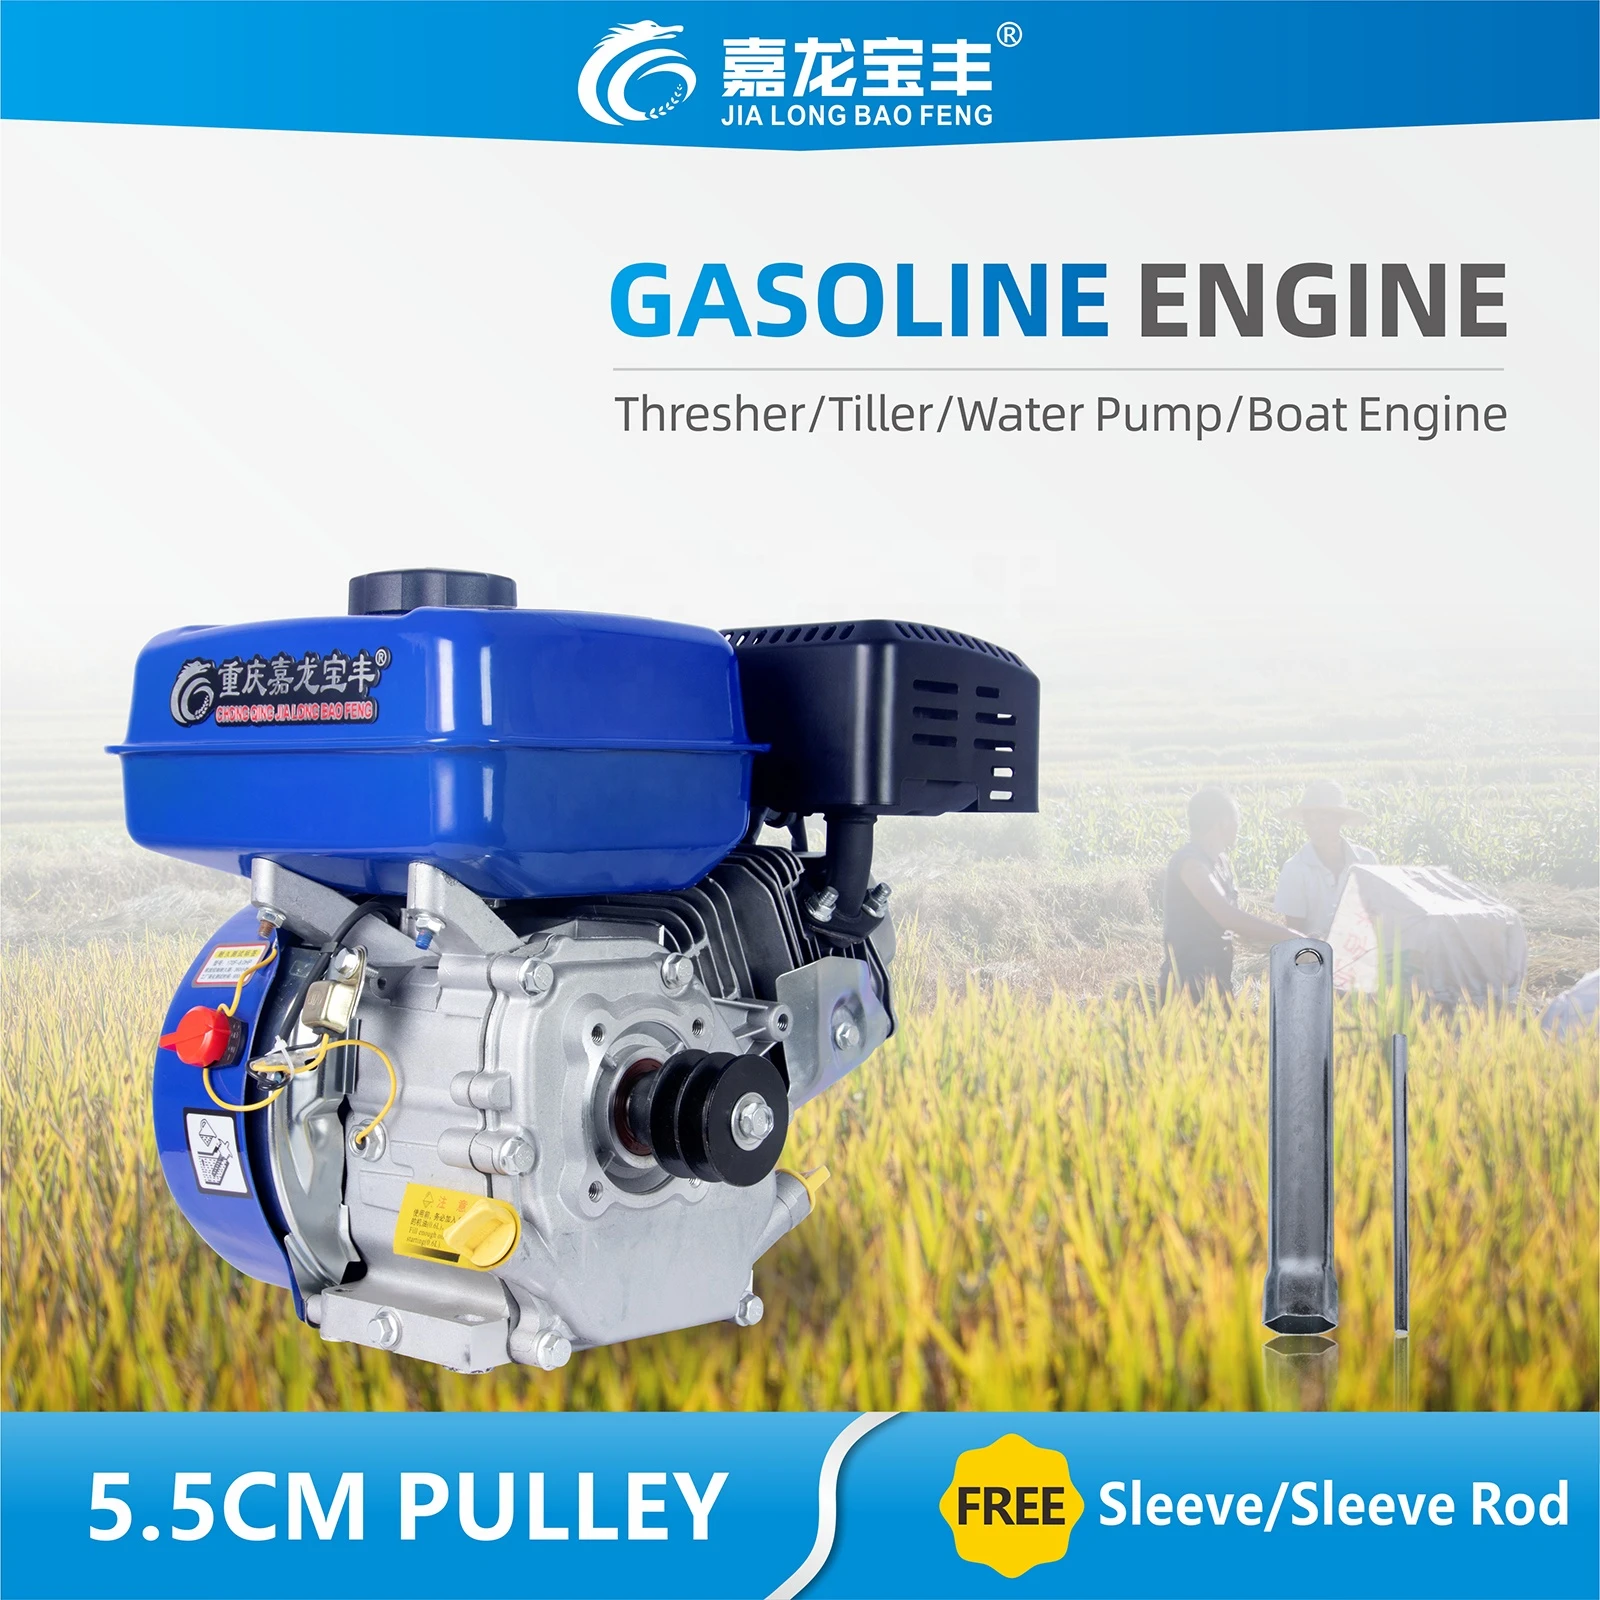 Hot Sale Machine Petrol Gasoline Engine with Performance